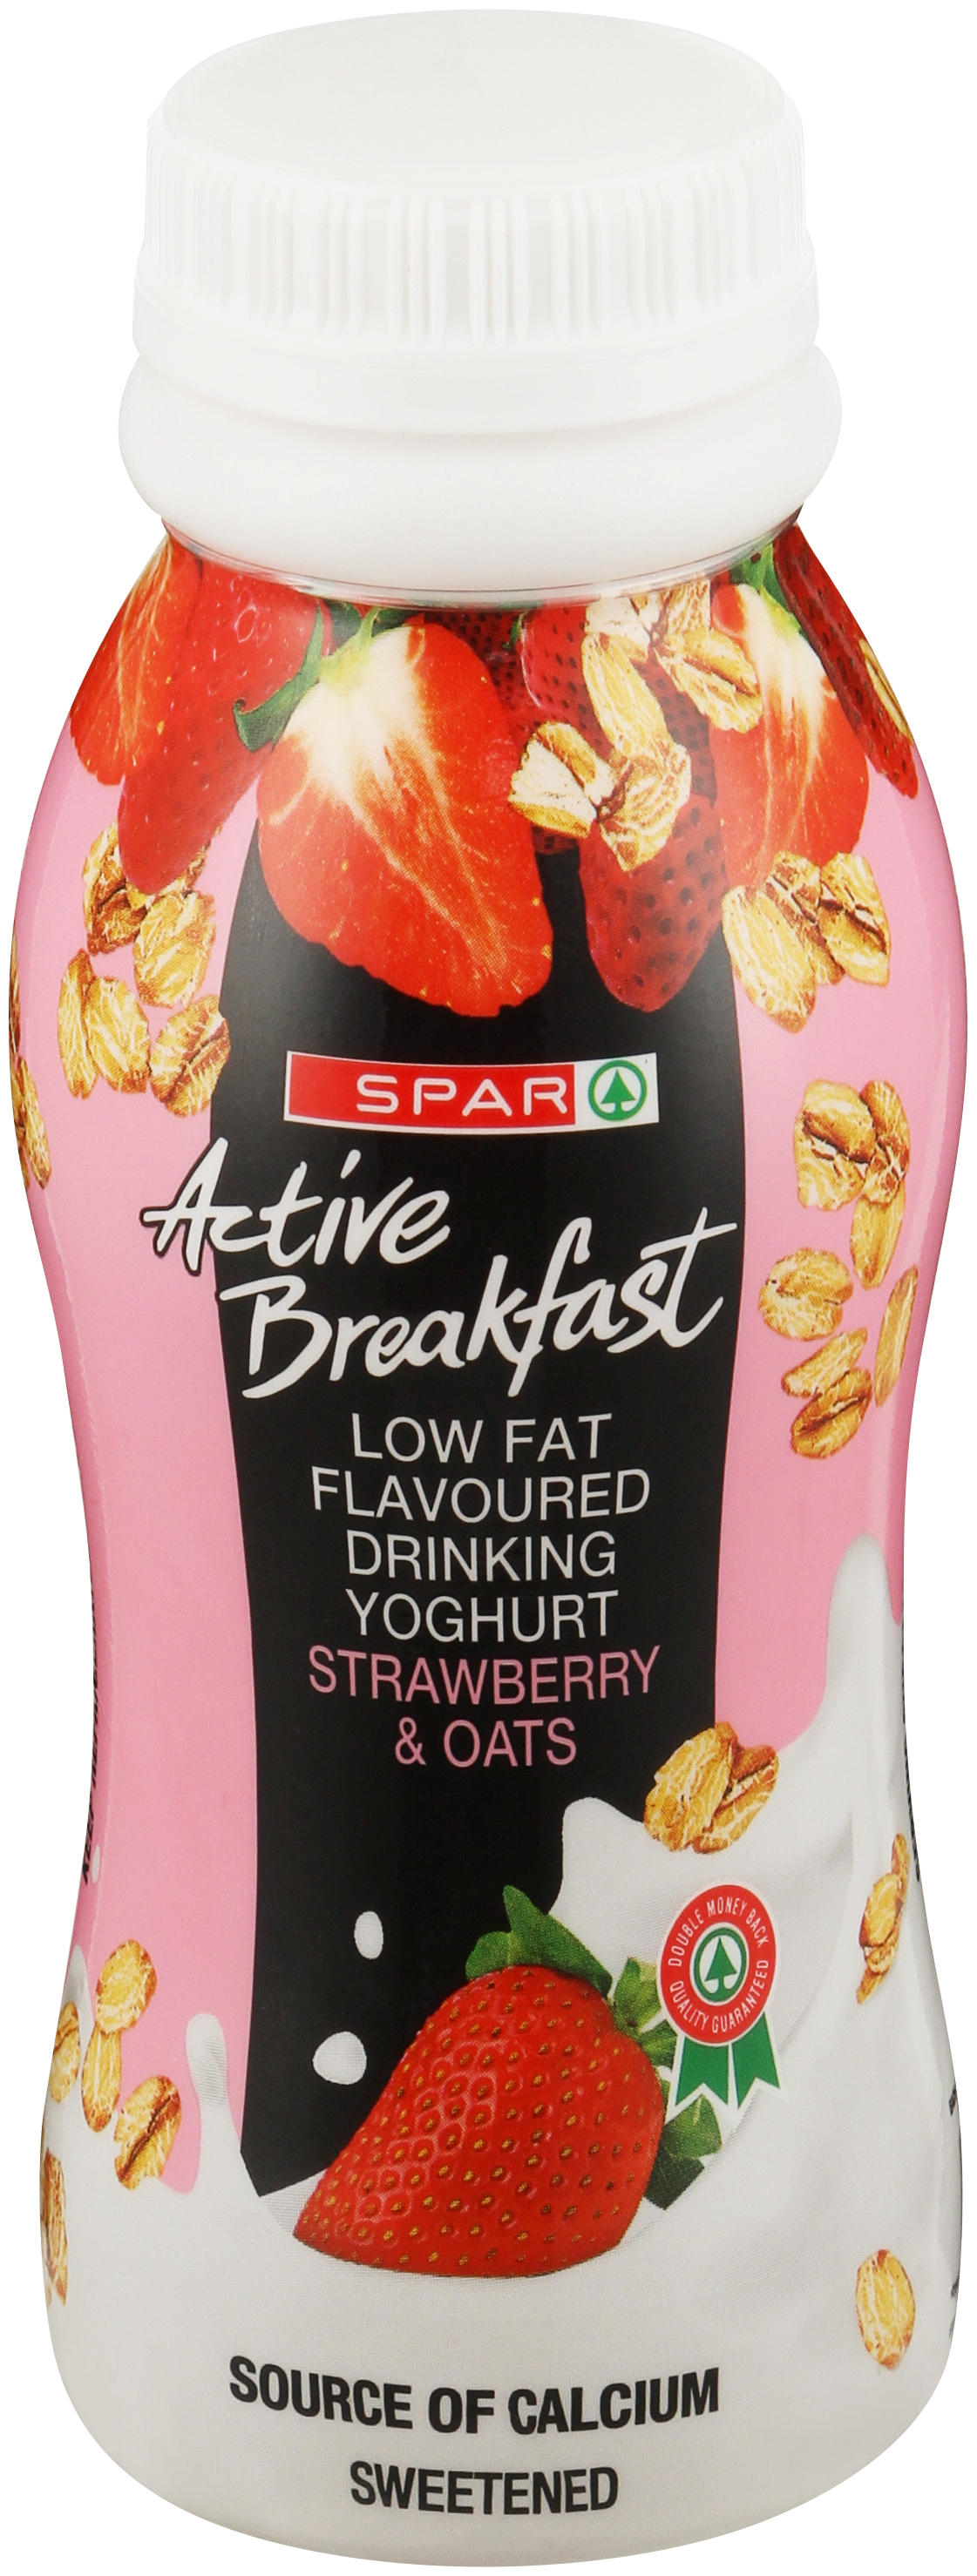 active breakfast strawberry